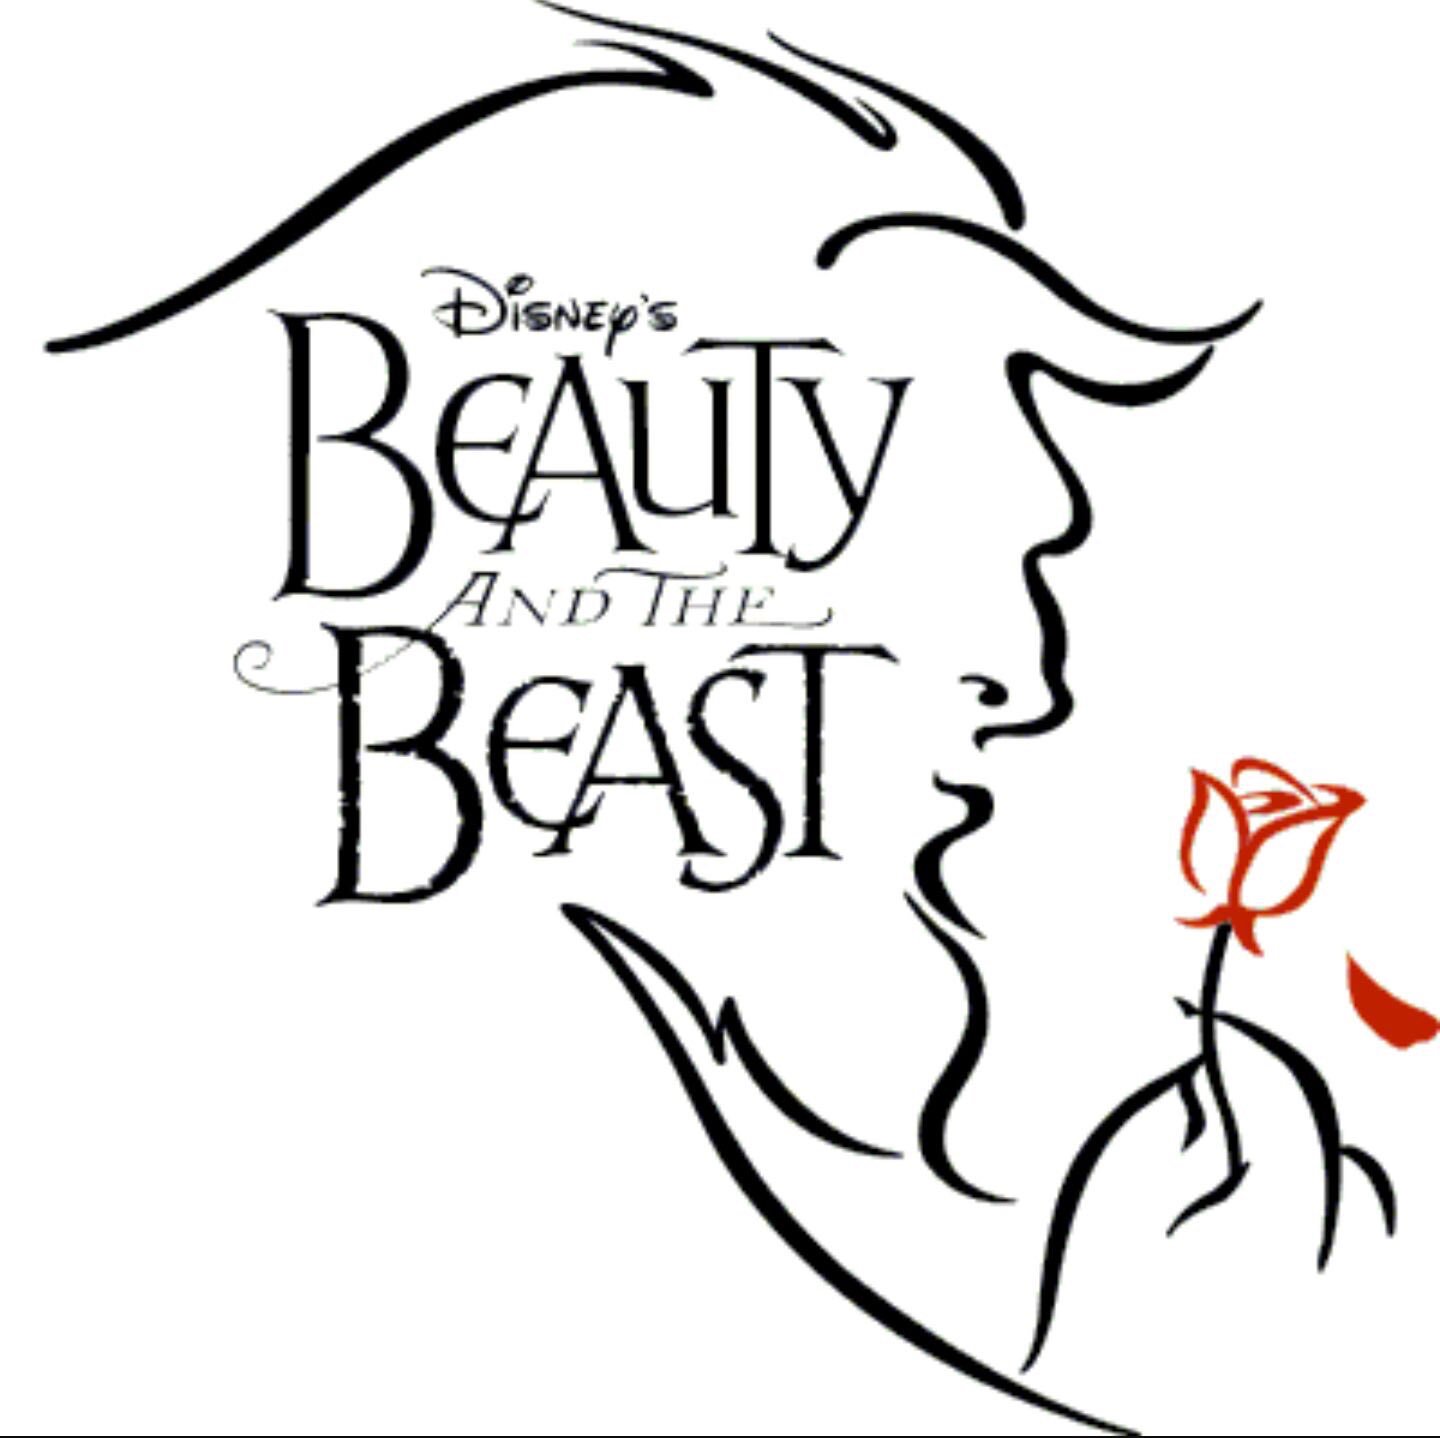 Beauty and the Beast надпись